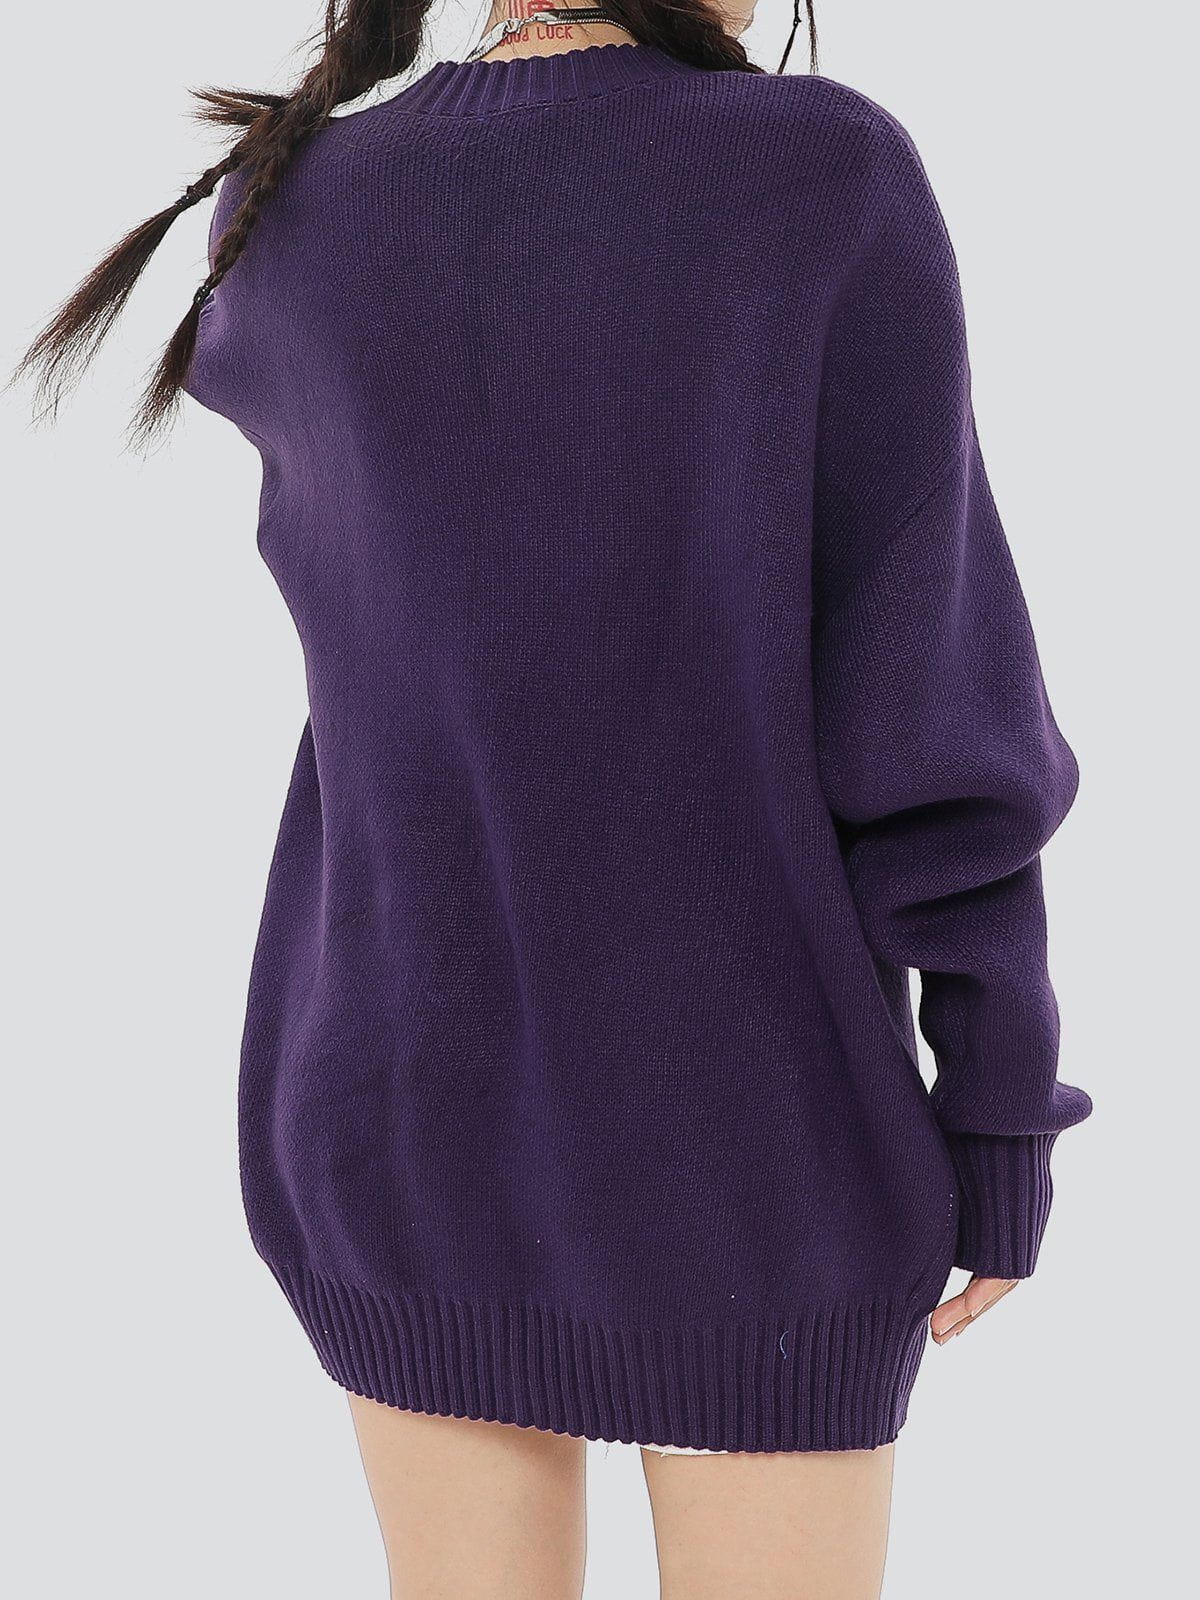 Eprezzy® - Letter Deformation Love Sweater Streetwear Fashion - eprezzy.com